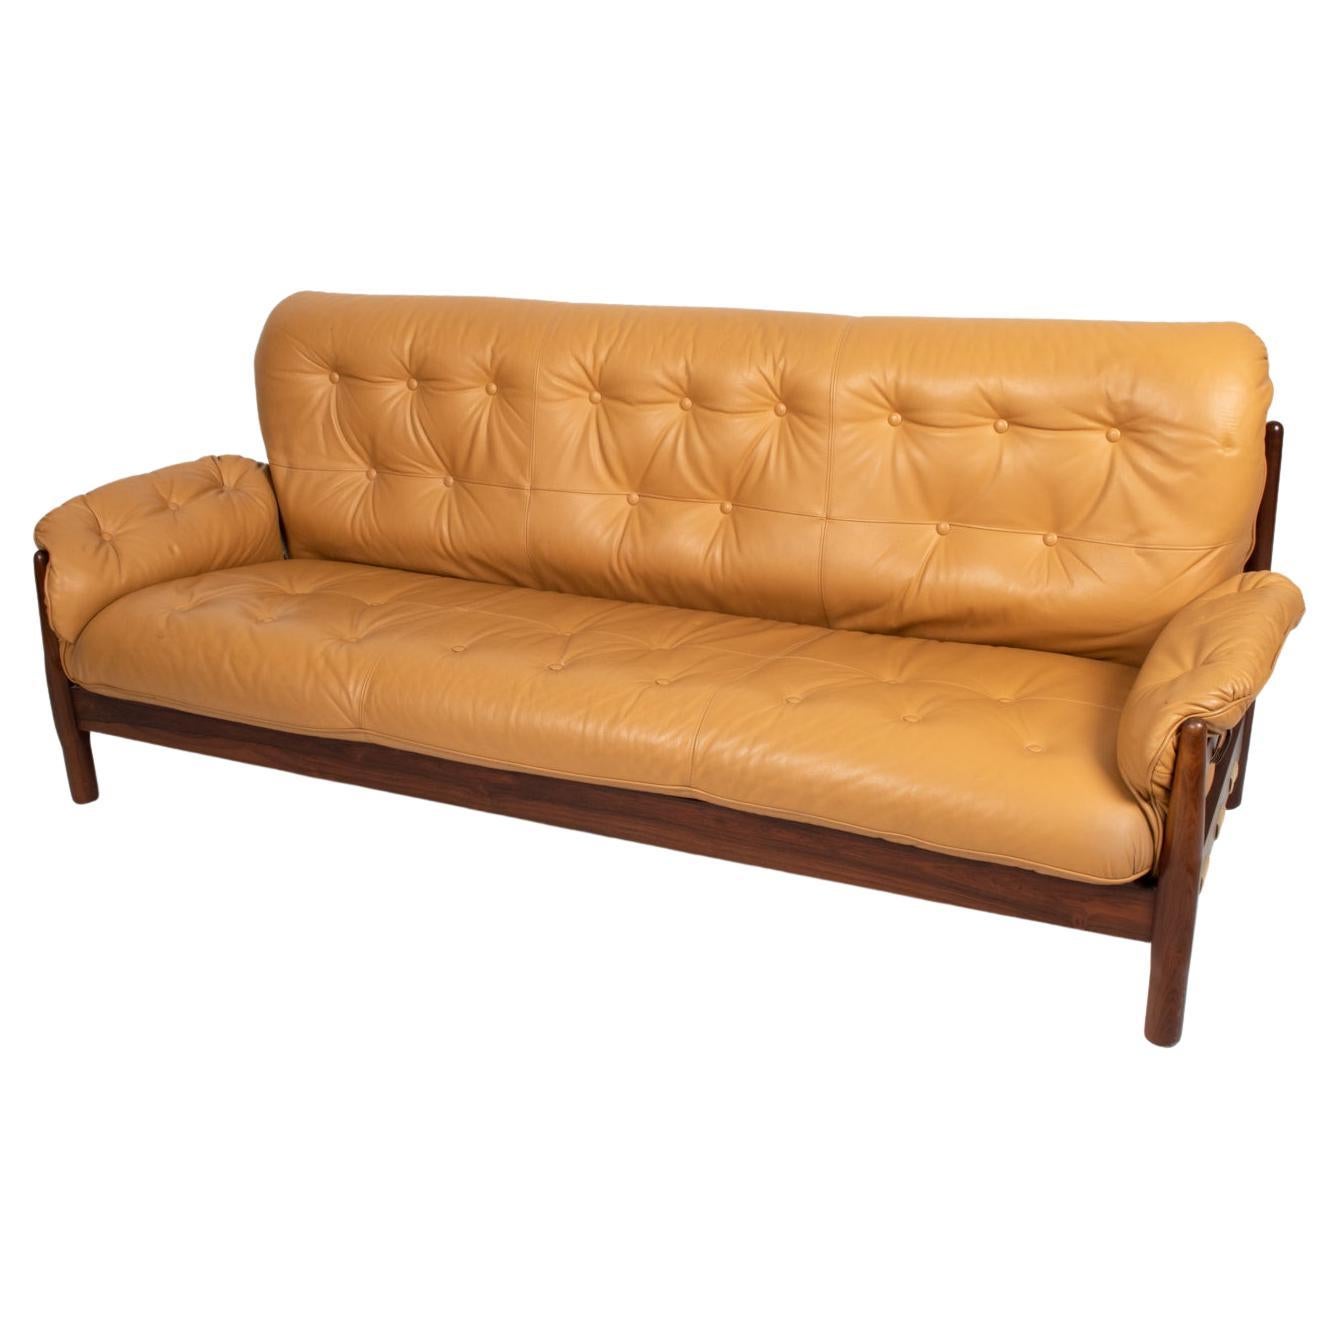 Brazilian Modernist Rosewood & Leather Sofa, circa 1970s For Sale